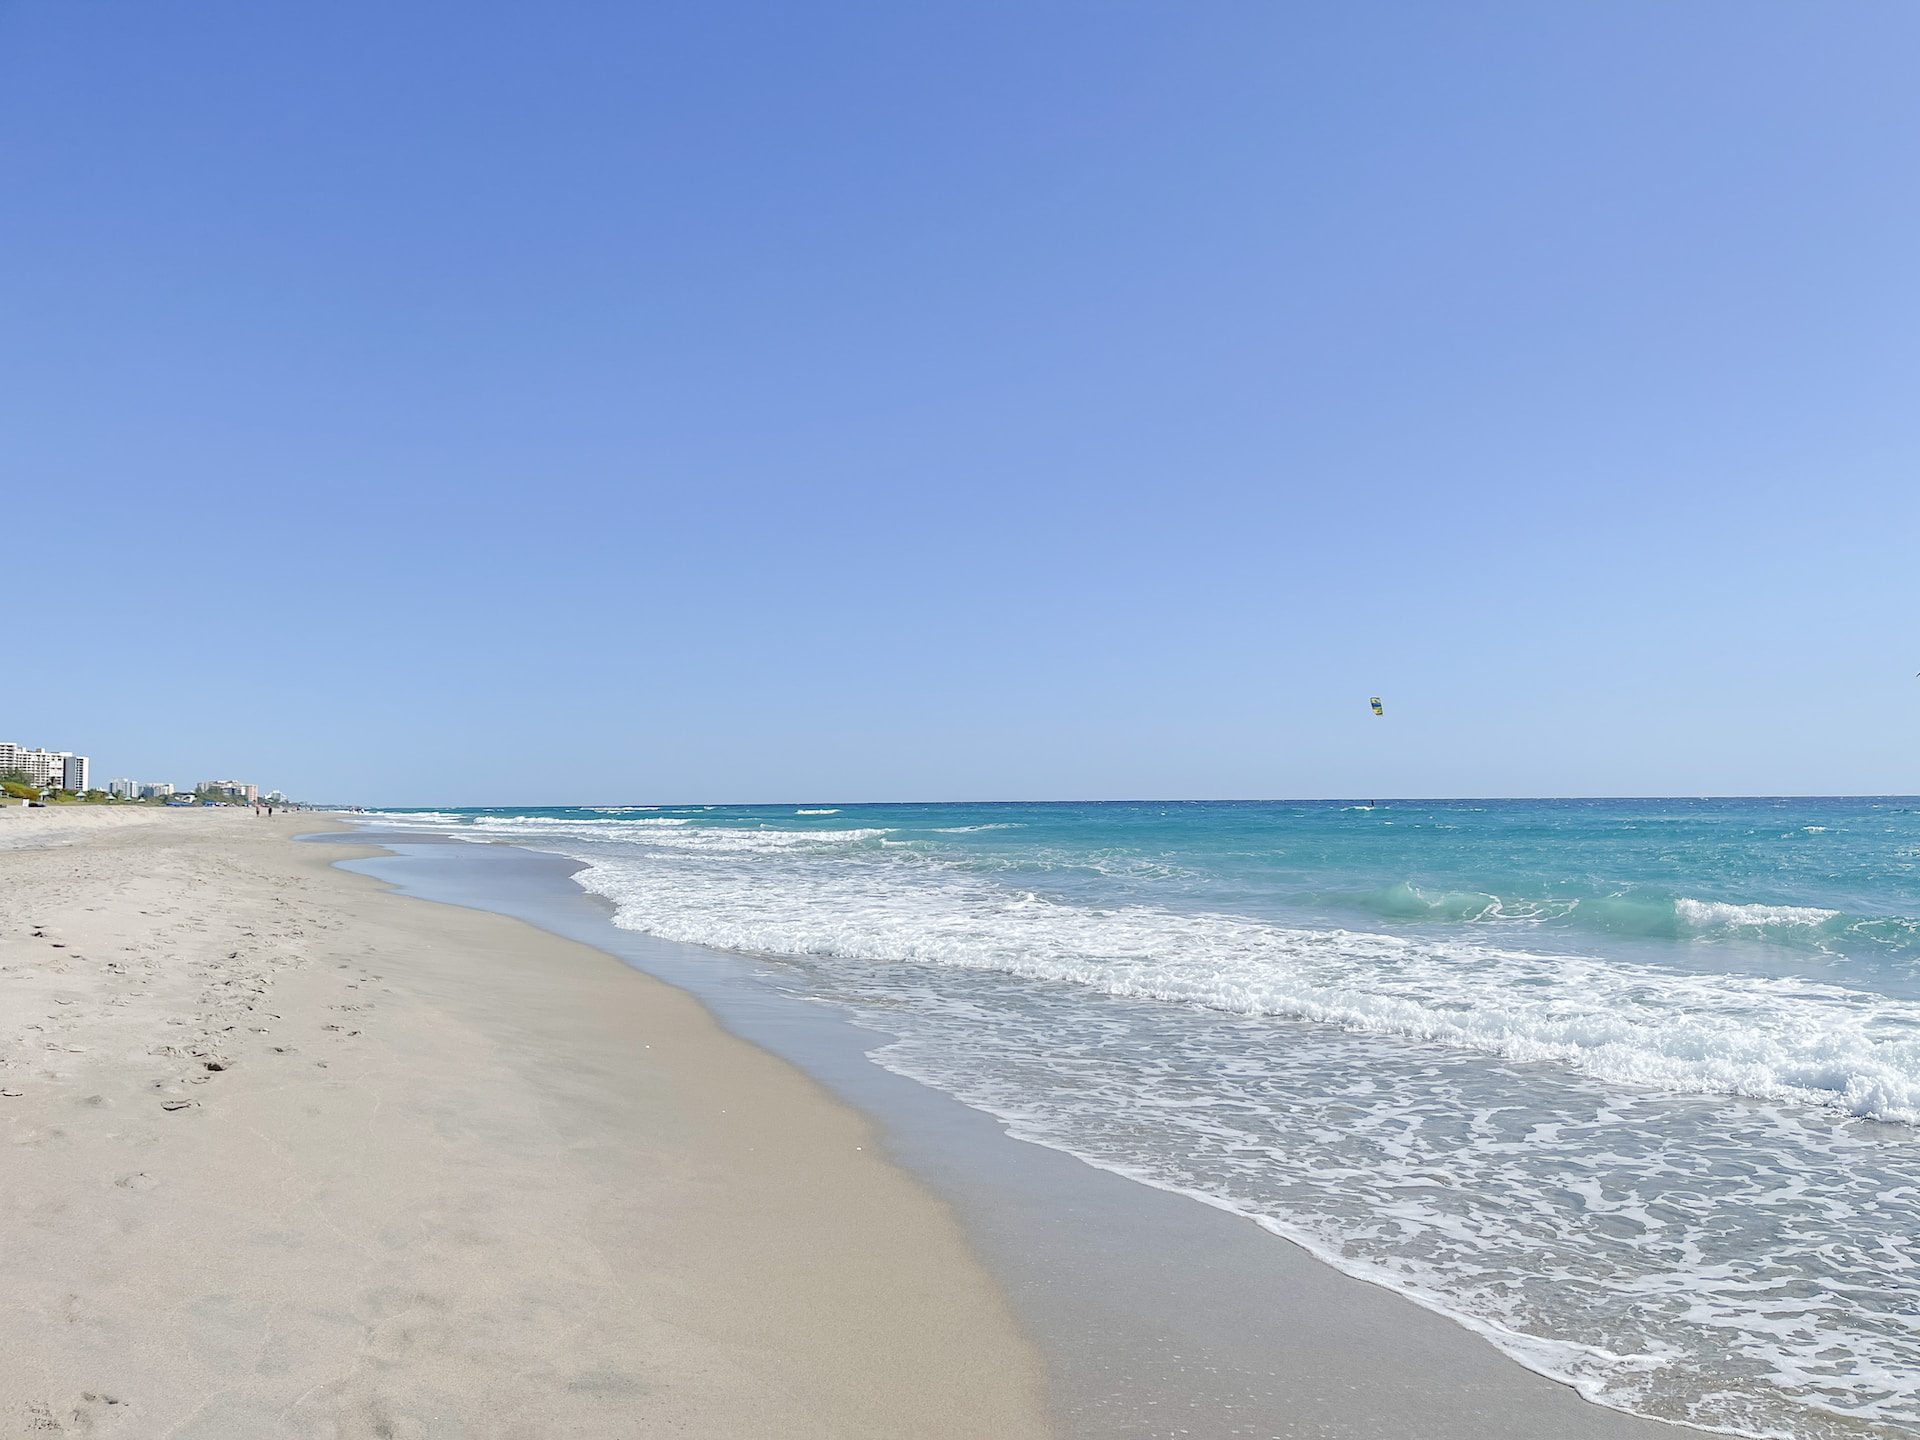 View of beach in Boca Raton, Florida.